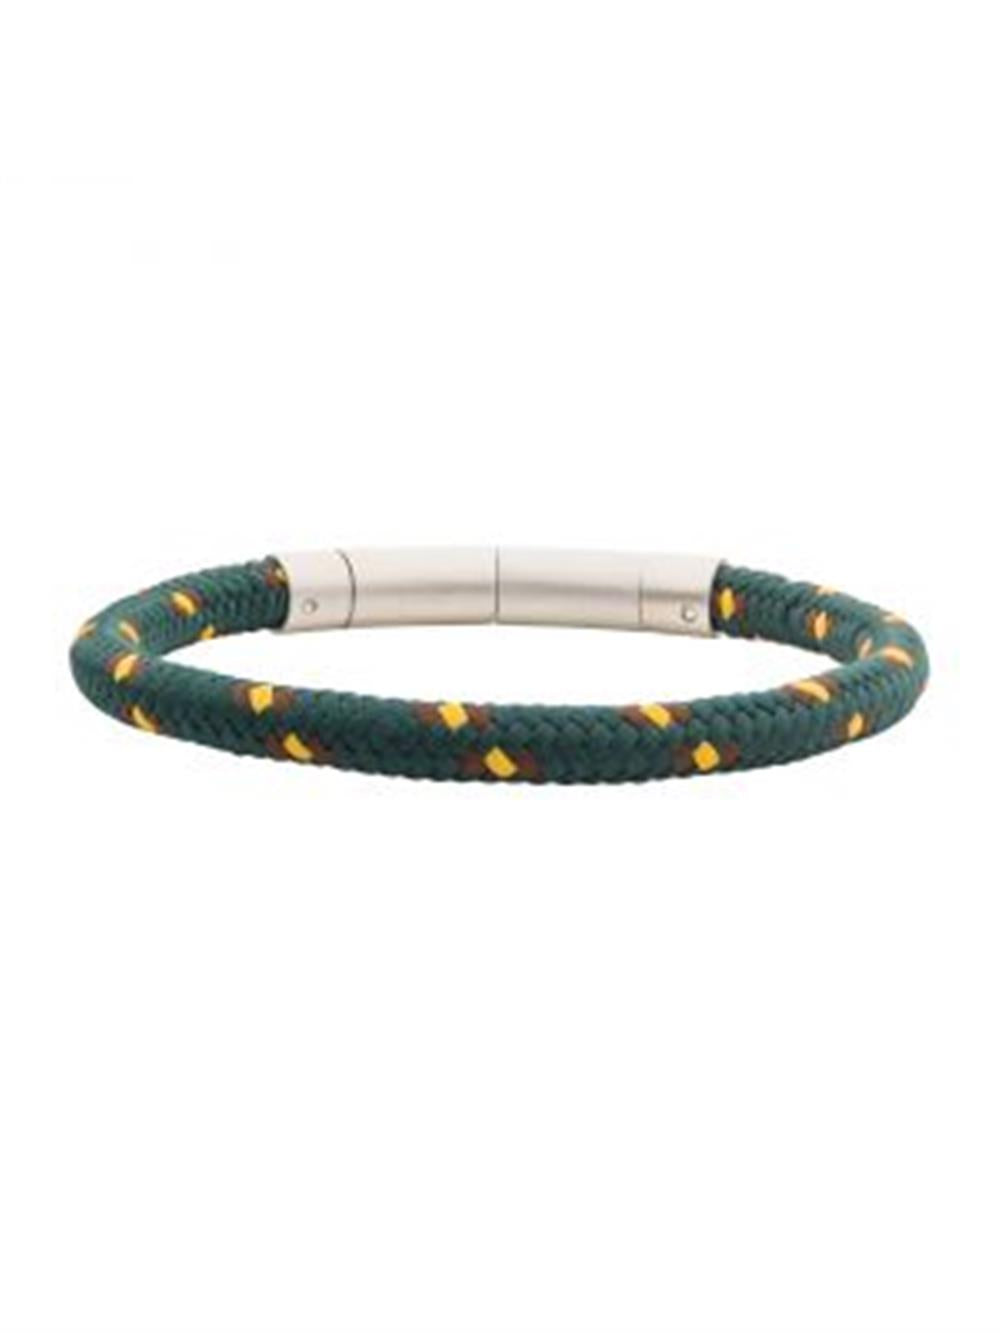 6mm Green, Brown and Yellow Nylon Cord Bracelet. Length: 8.5-8" | INOX